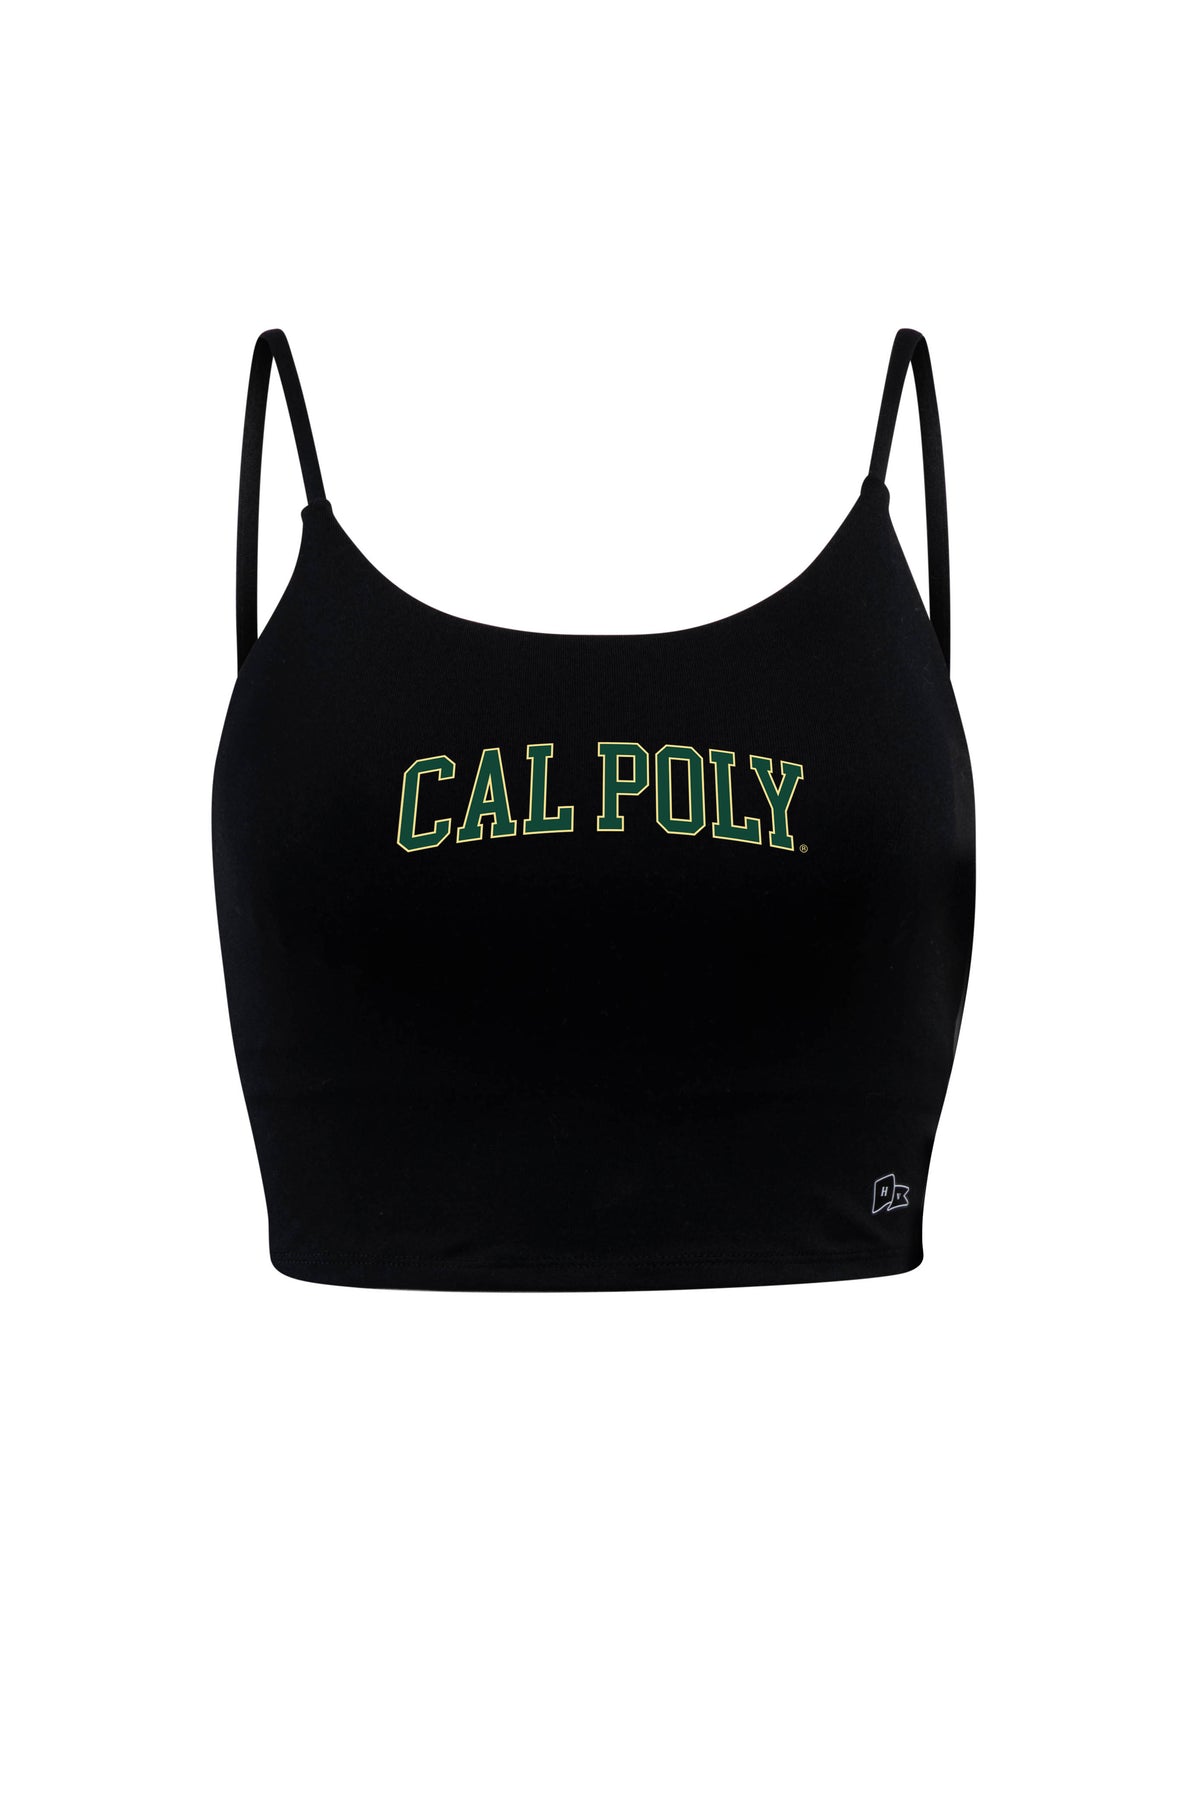 California Polytechnic State University Bra Tank Top